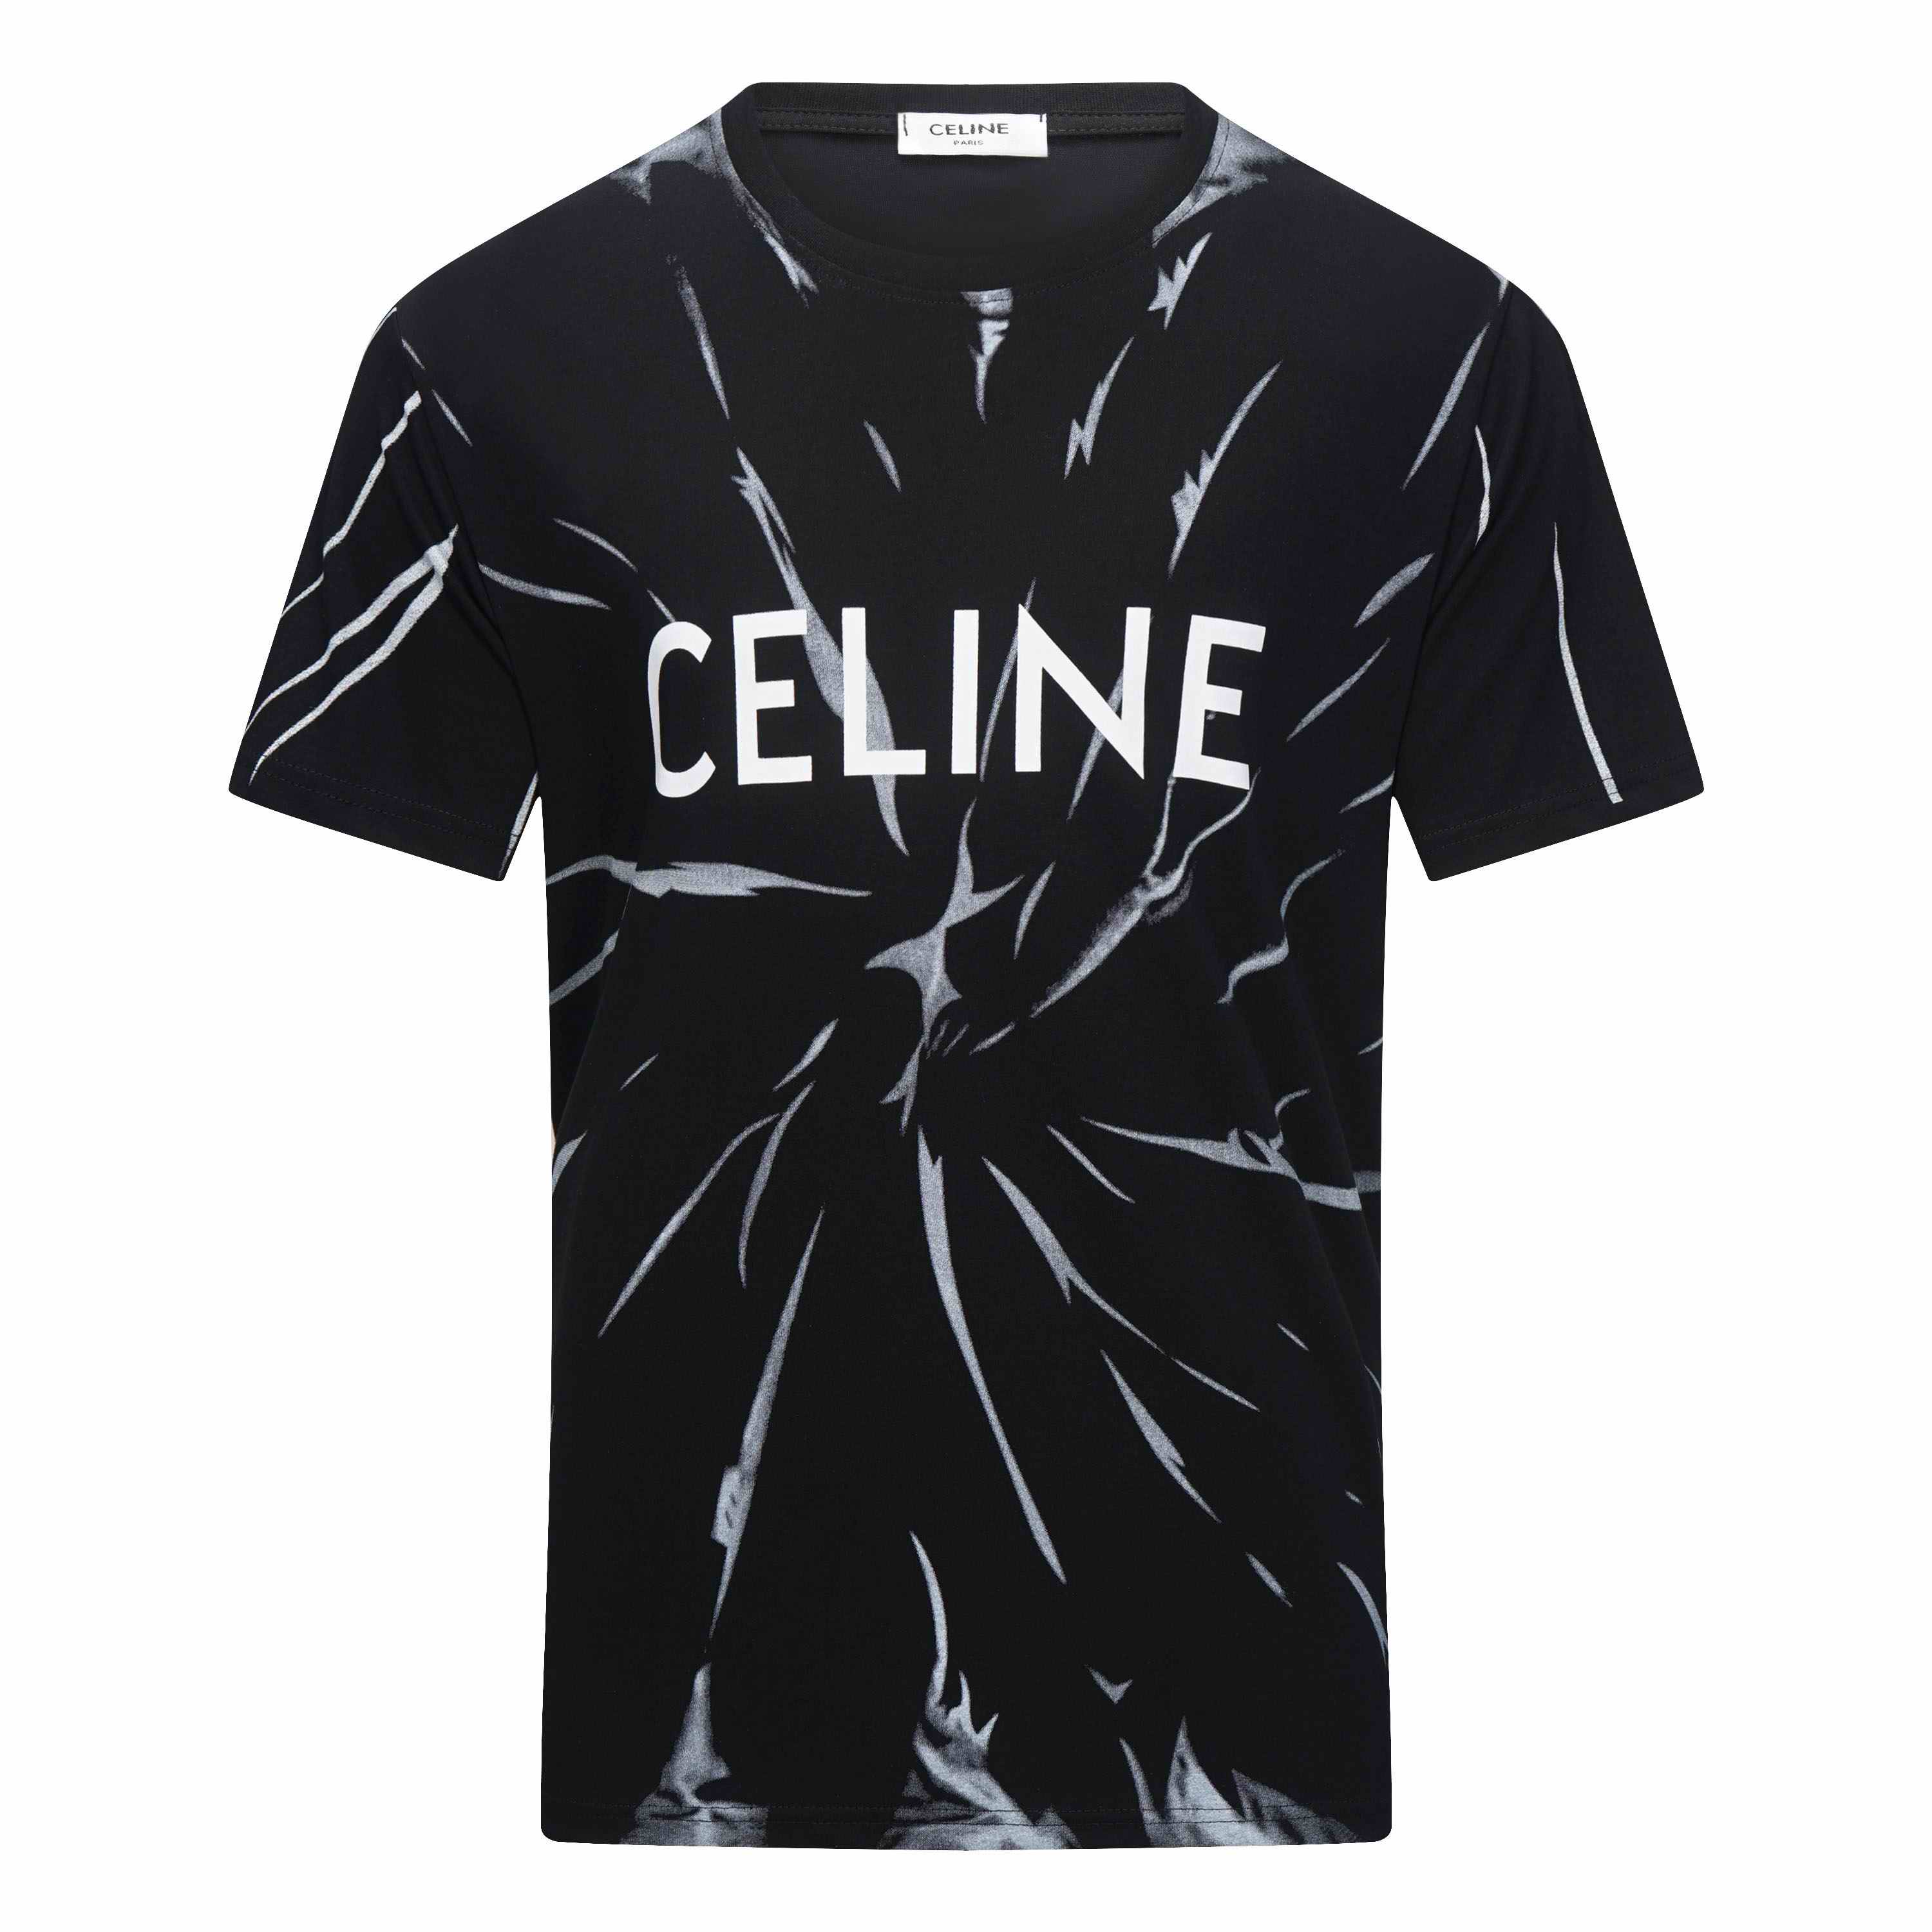  Celine Shirts 004